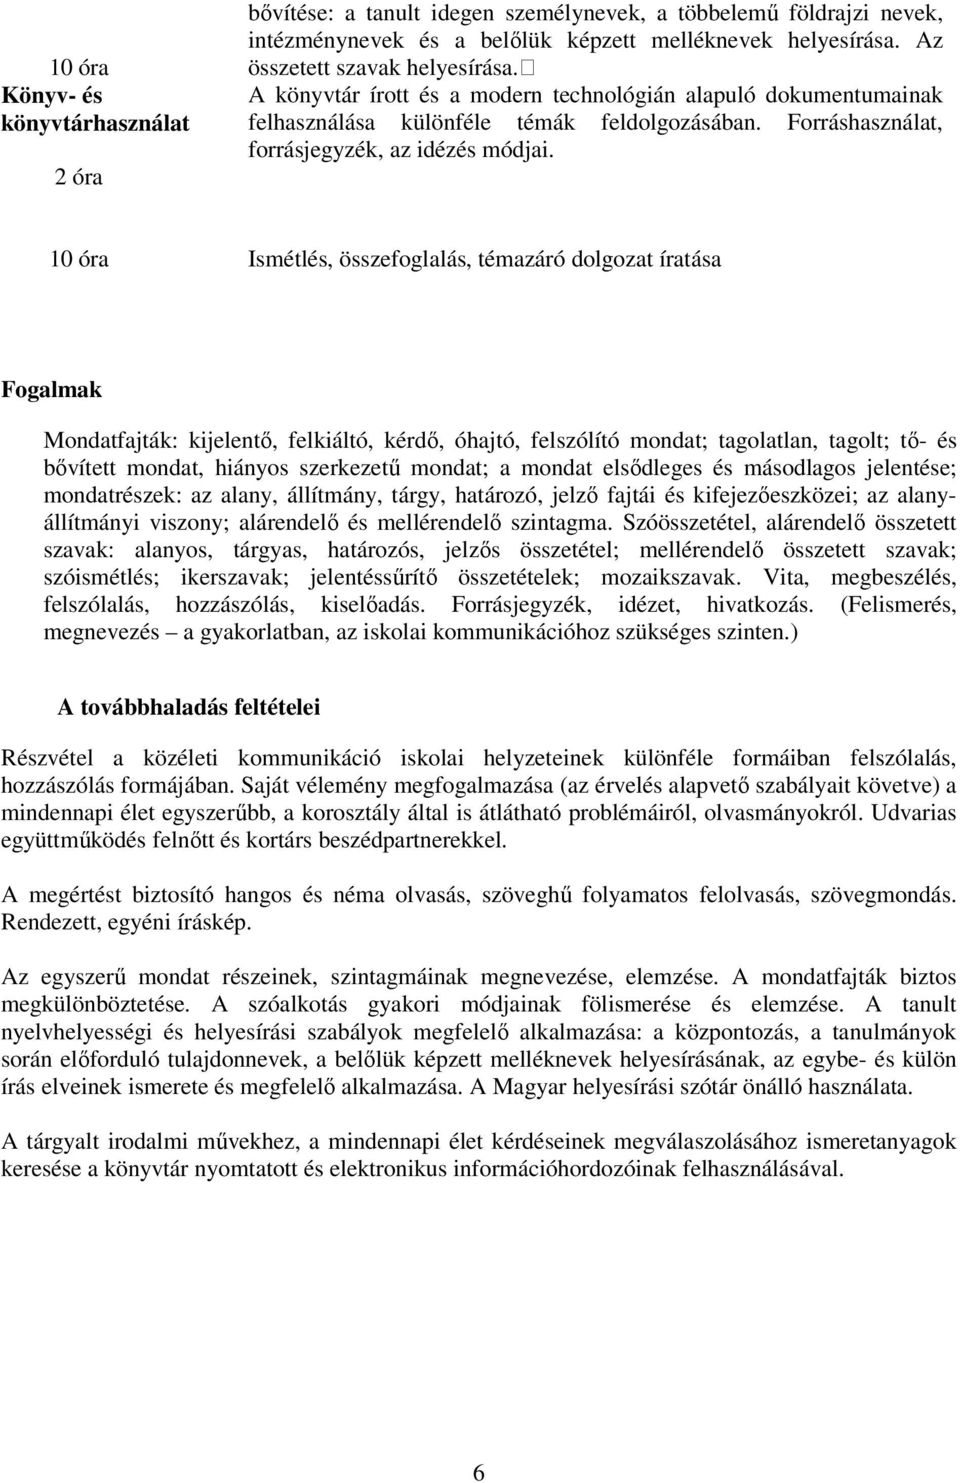 MAGYAR NYELV ÉS IRODALOM - PDF Free Download